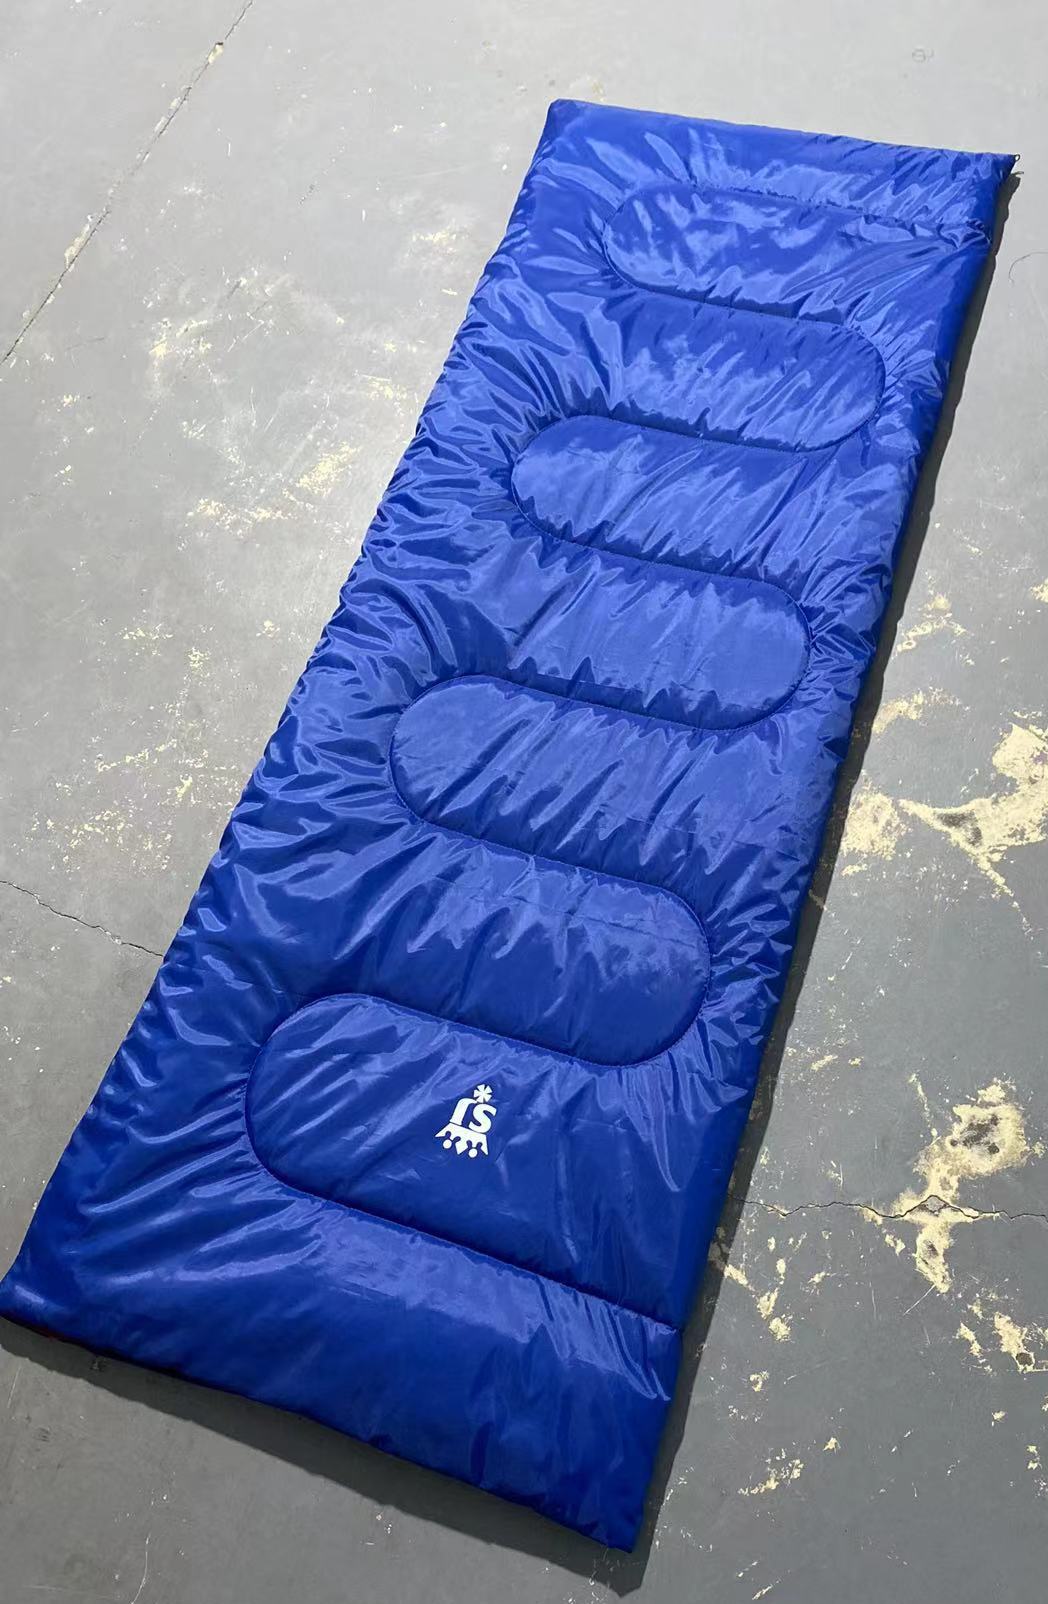 Evenlope Sleeping Bag for Camping sleeping